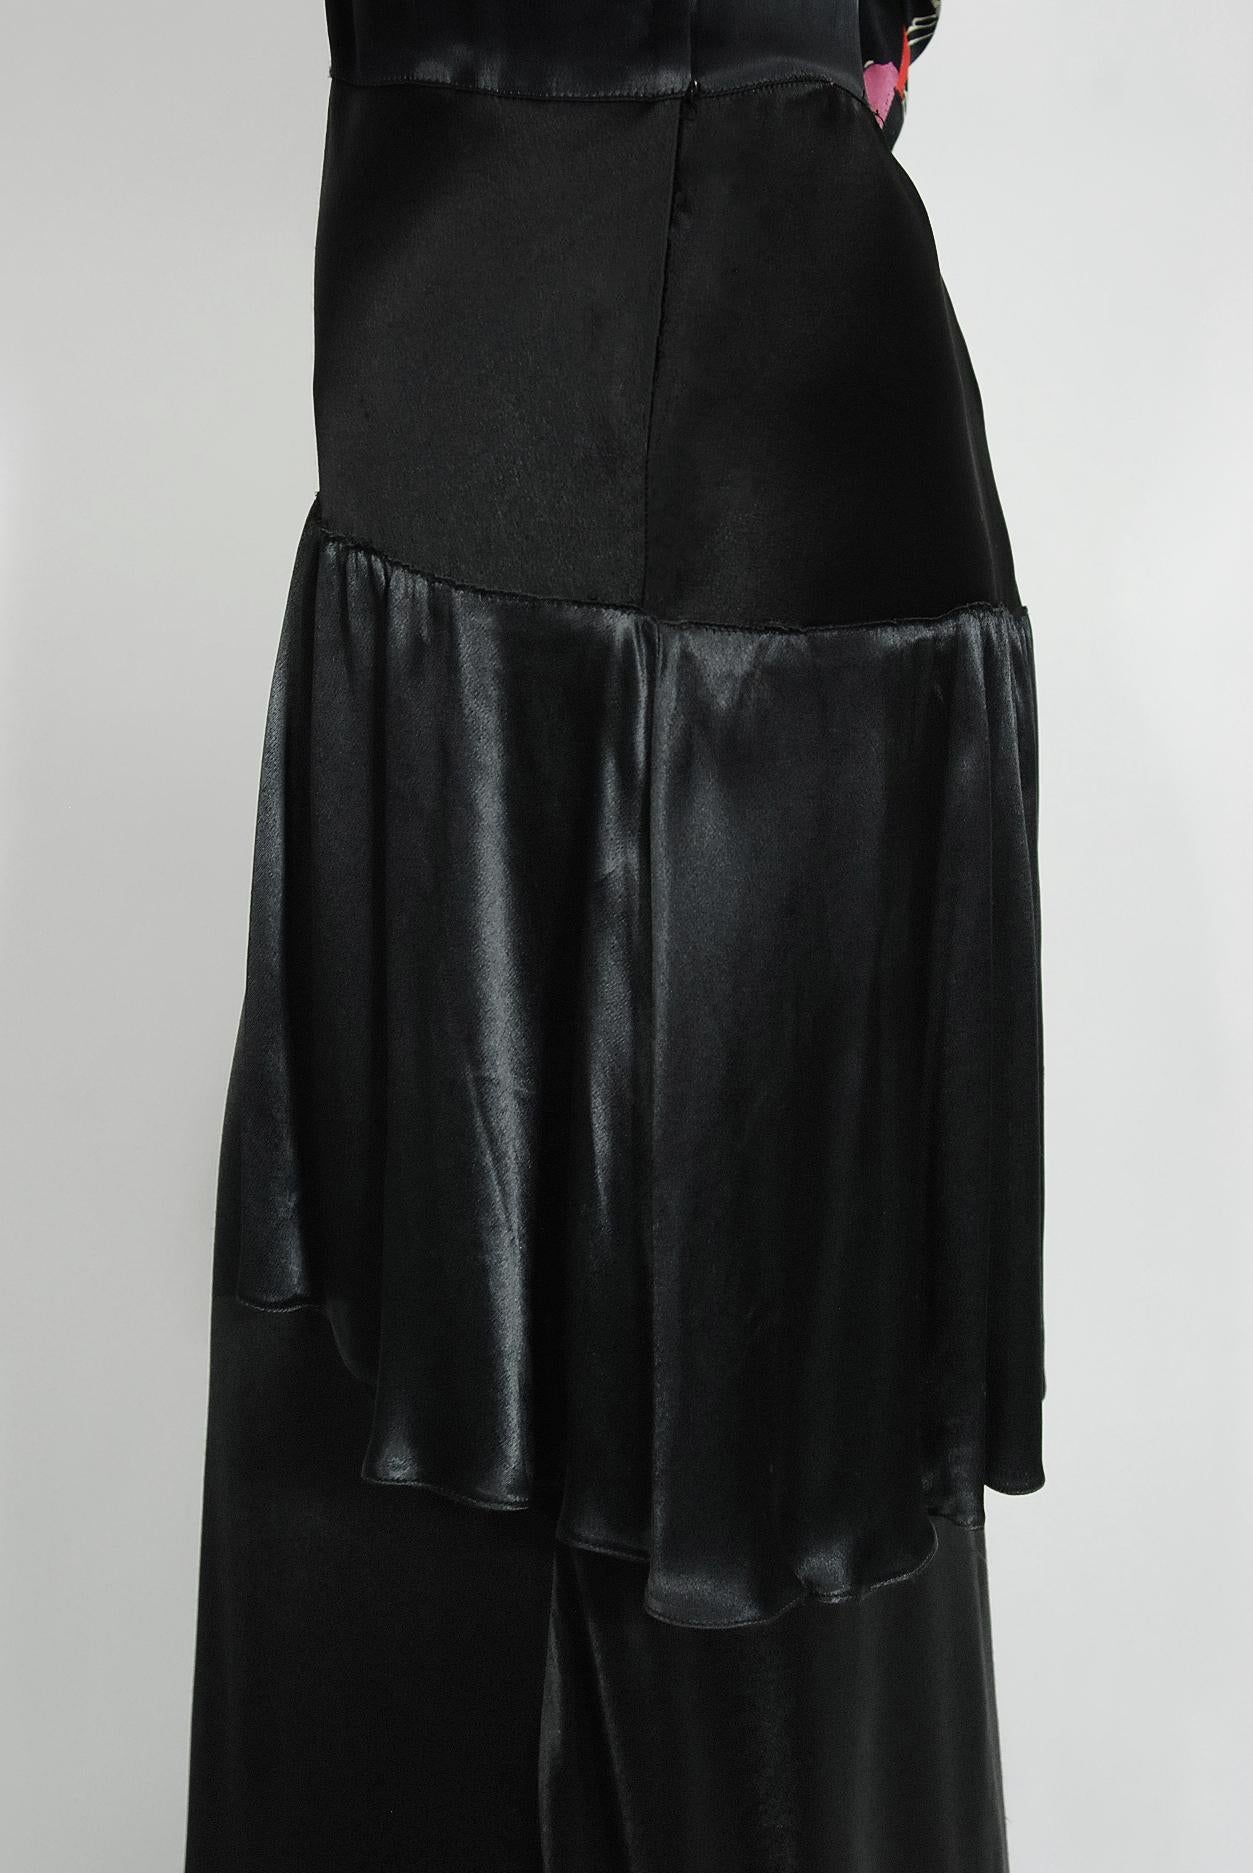 Vintage 1930's Black Floral Print Silk Satin Tiered Bias-Cut Hourglass Deco Gown 1